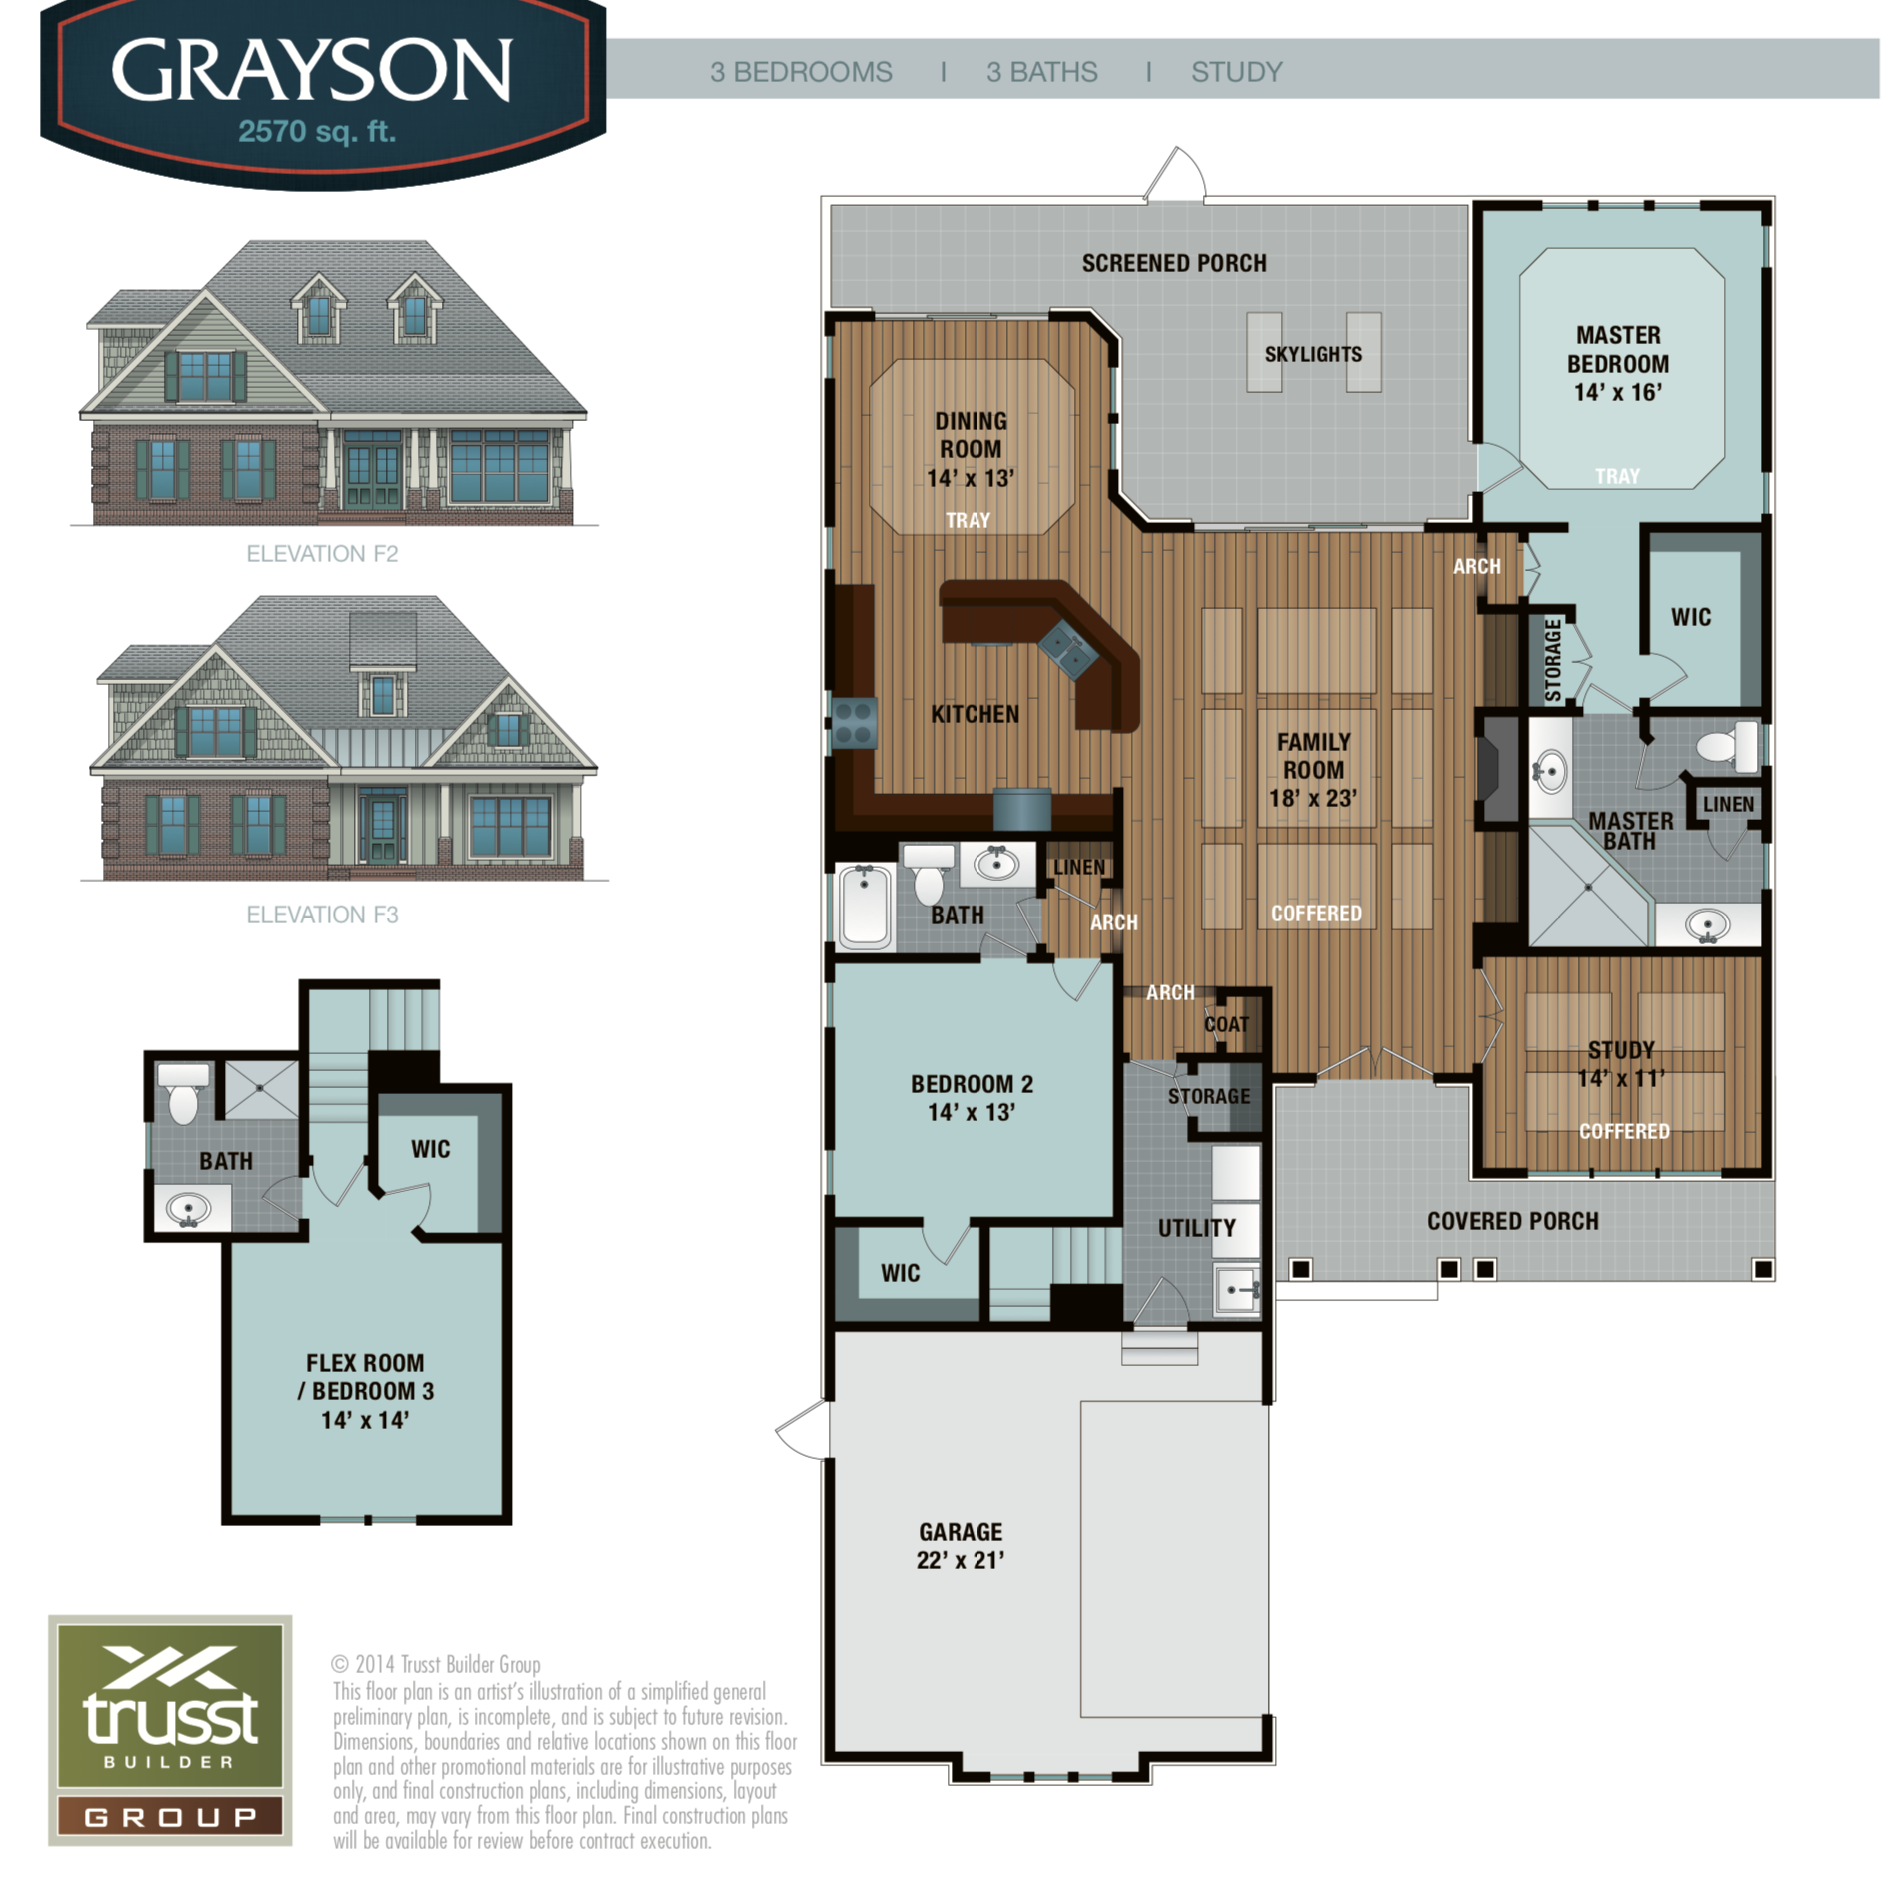 Grayson floor plan image